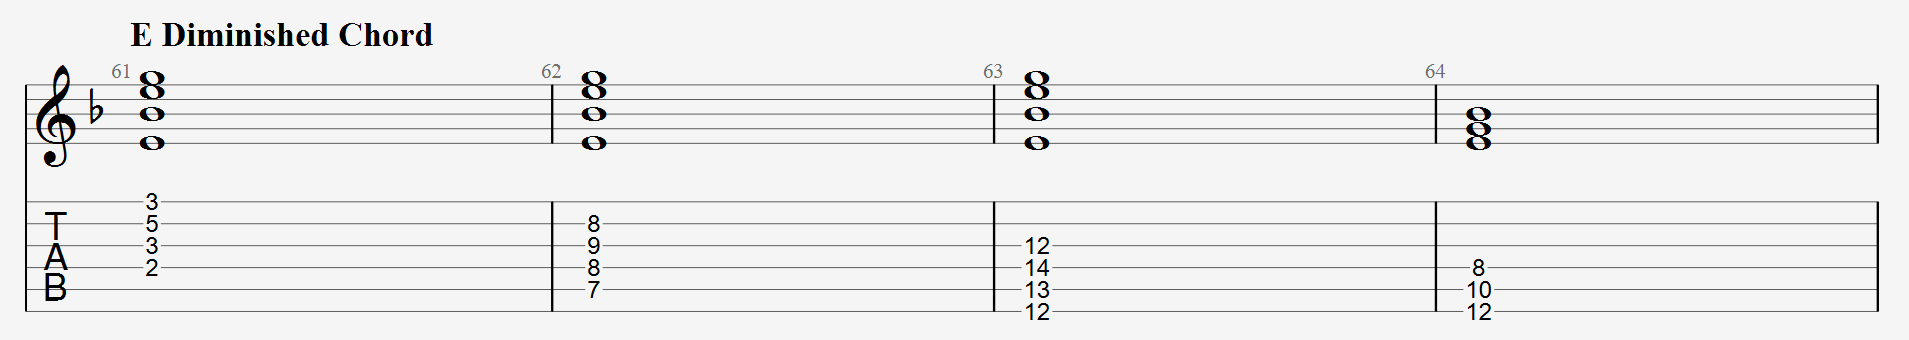 E Diminished chord shapes